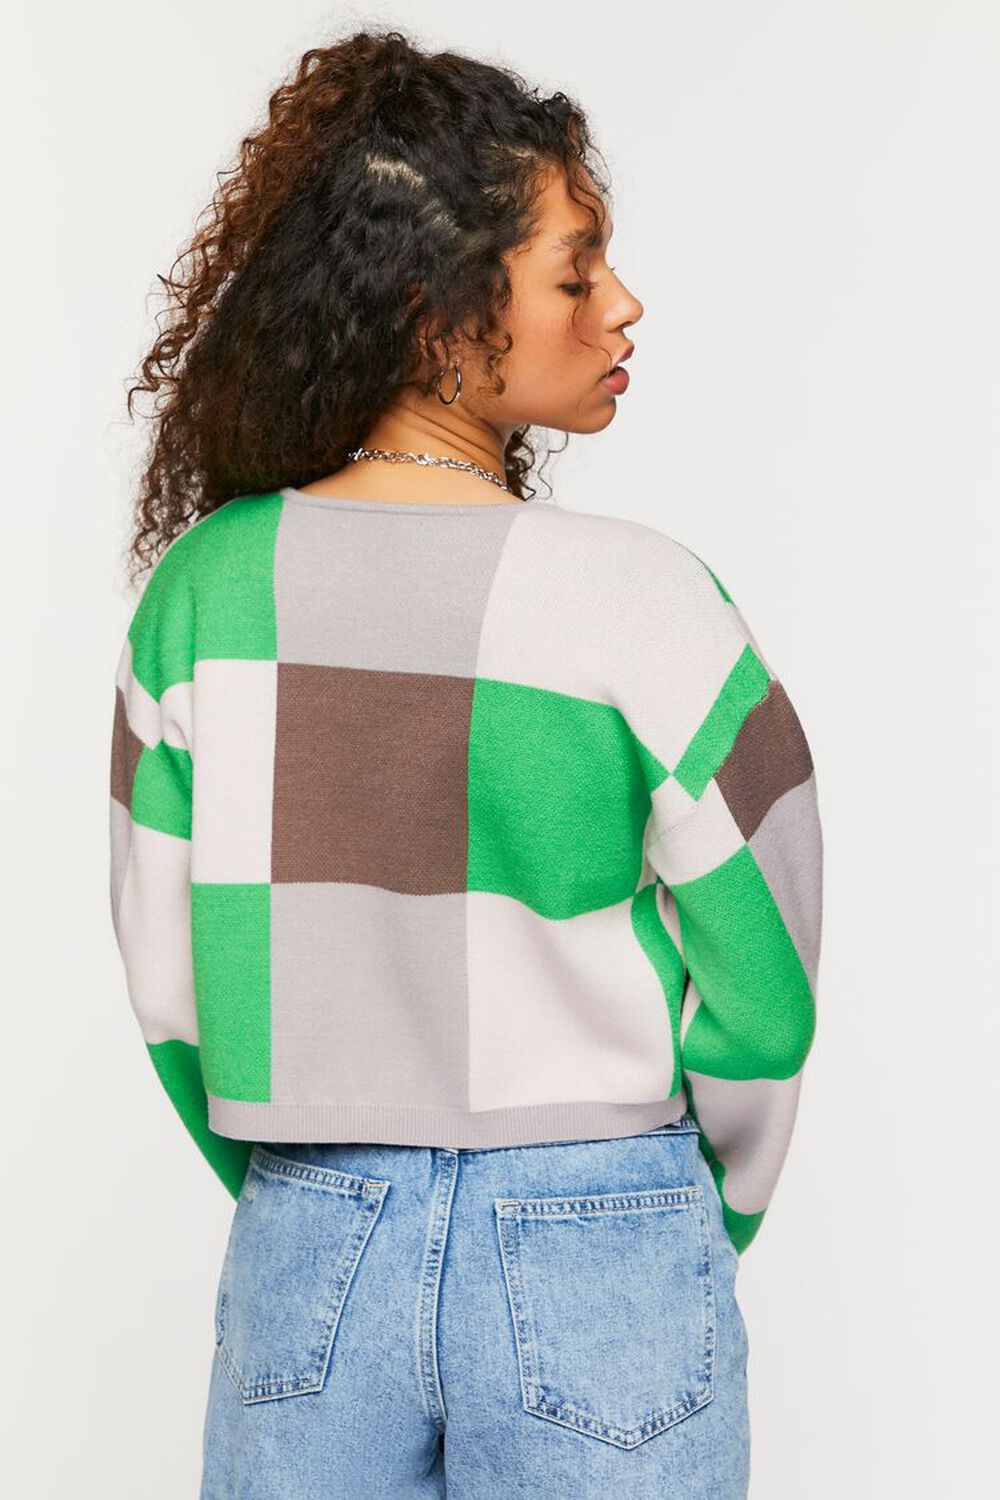 GREEN/SILVER Colorblock Cardigan Sweater, image 3